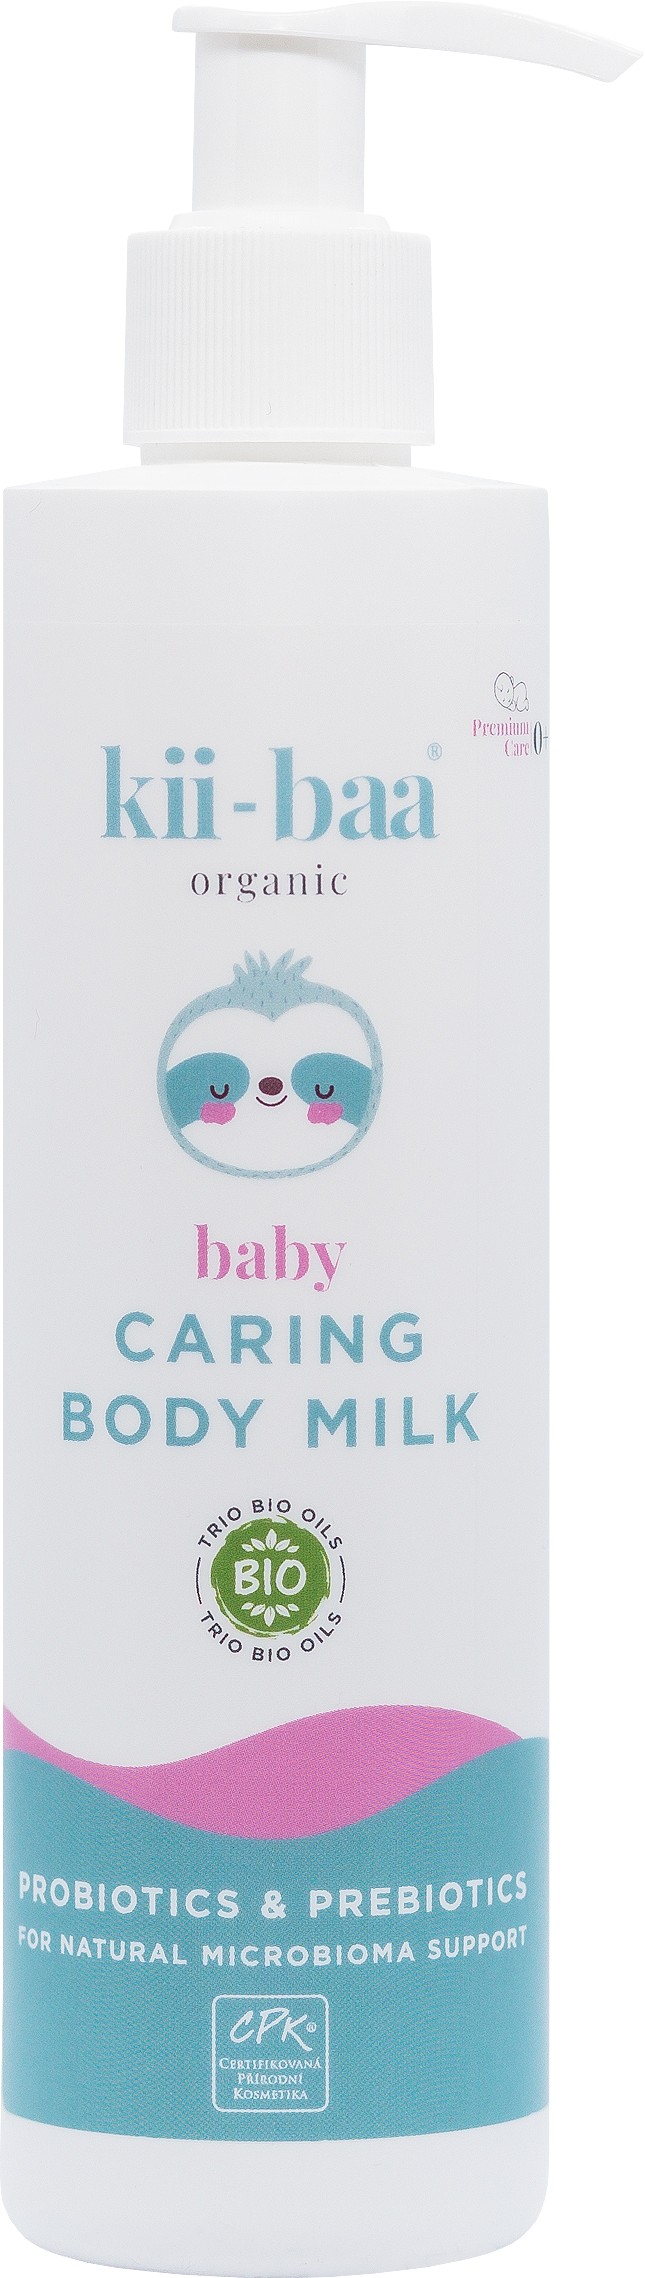 kii-baa organic Ošetrujúce telové mlieko (Caring Body Milk) 250 ml